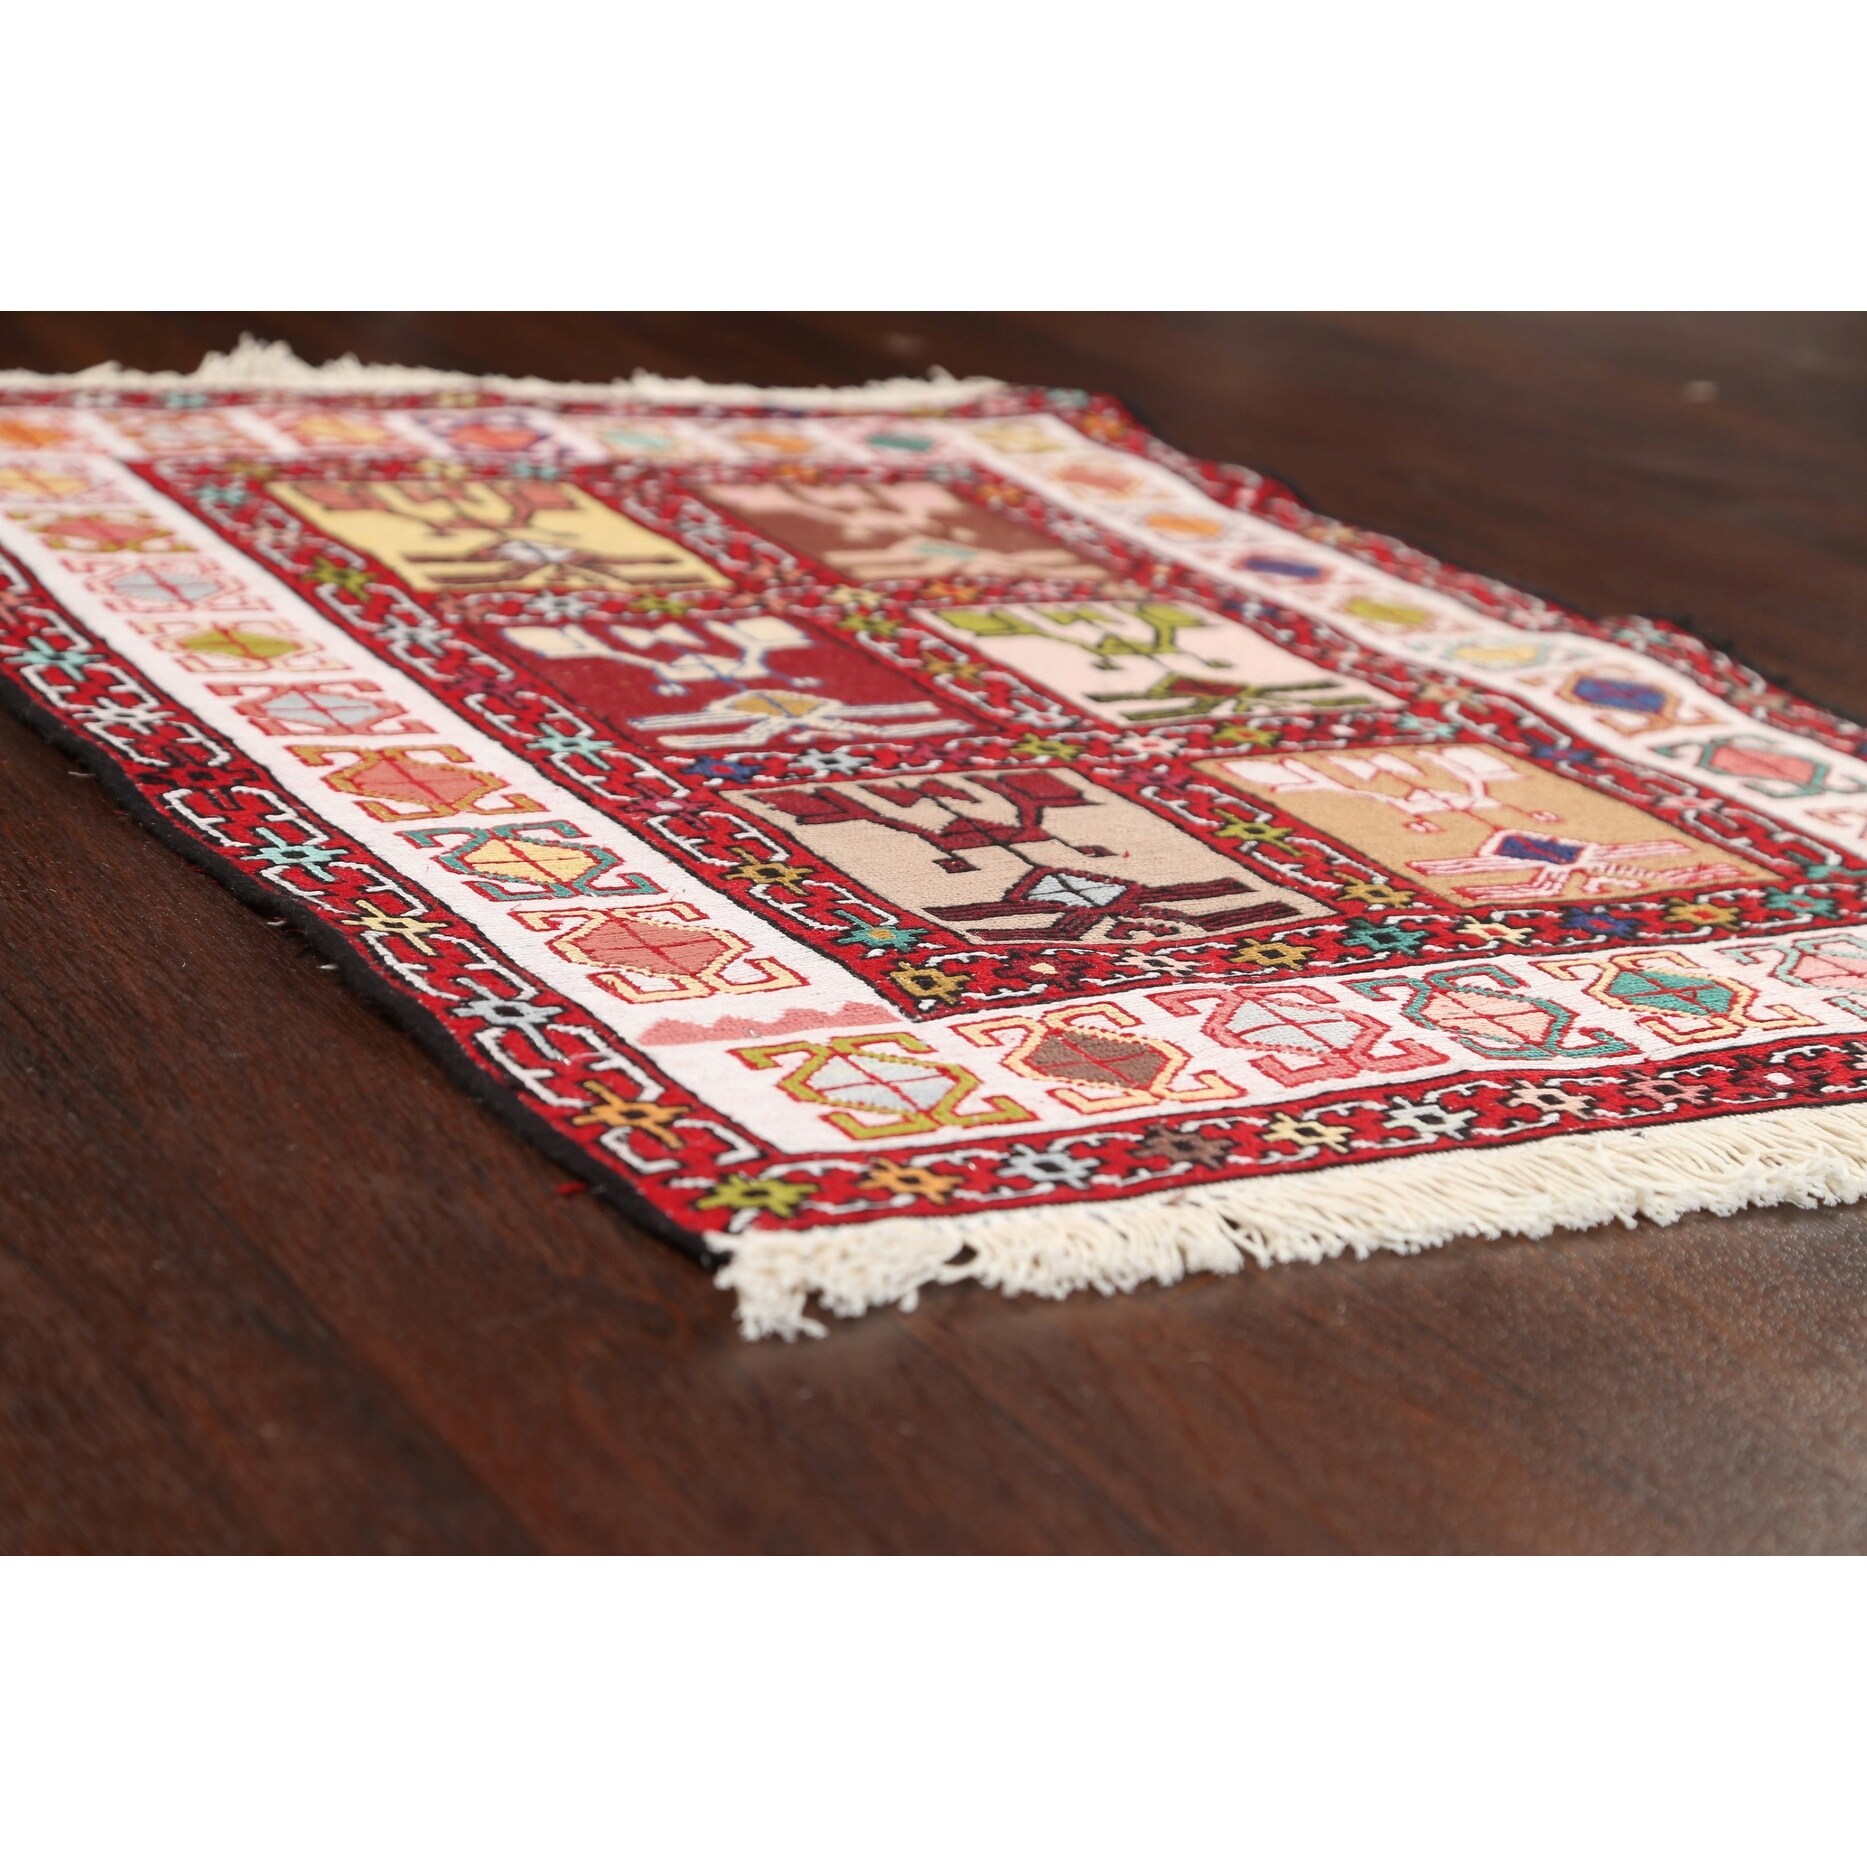 Silk Vegetable Dye Sumak Persian Area Rug Flat-weave Kitchen Carpet - 2'4  x 3'7 - Bed Bath & Beyond - 33206050